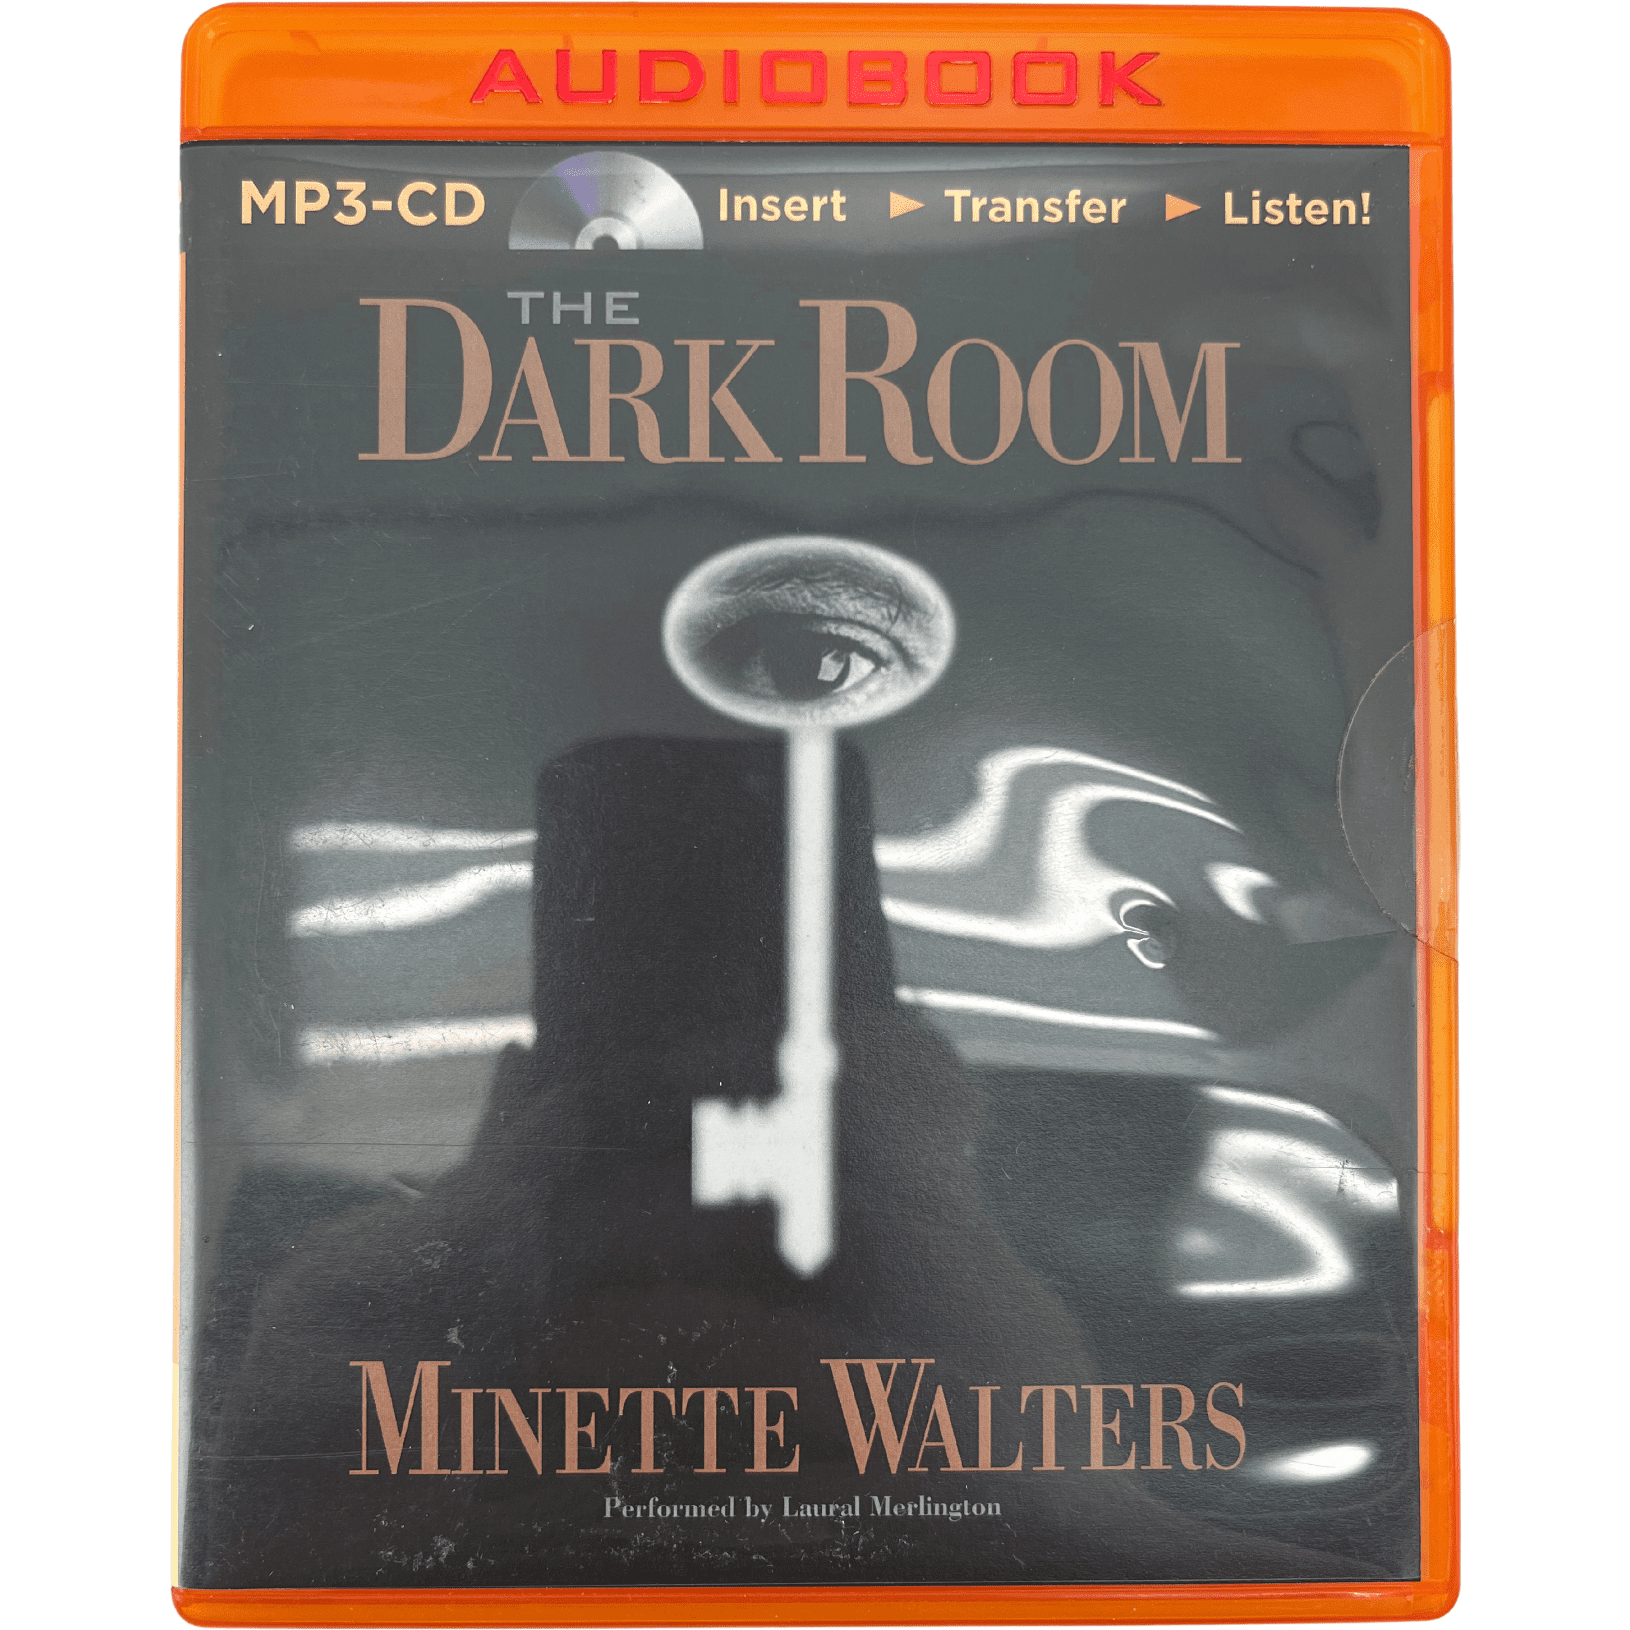 Audio Book "The Dark Room" / Author Minette Walters / MP3